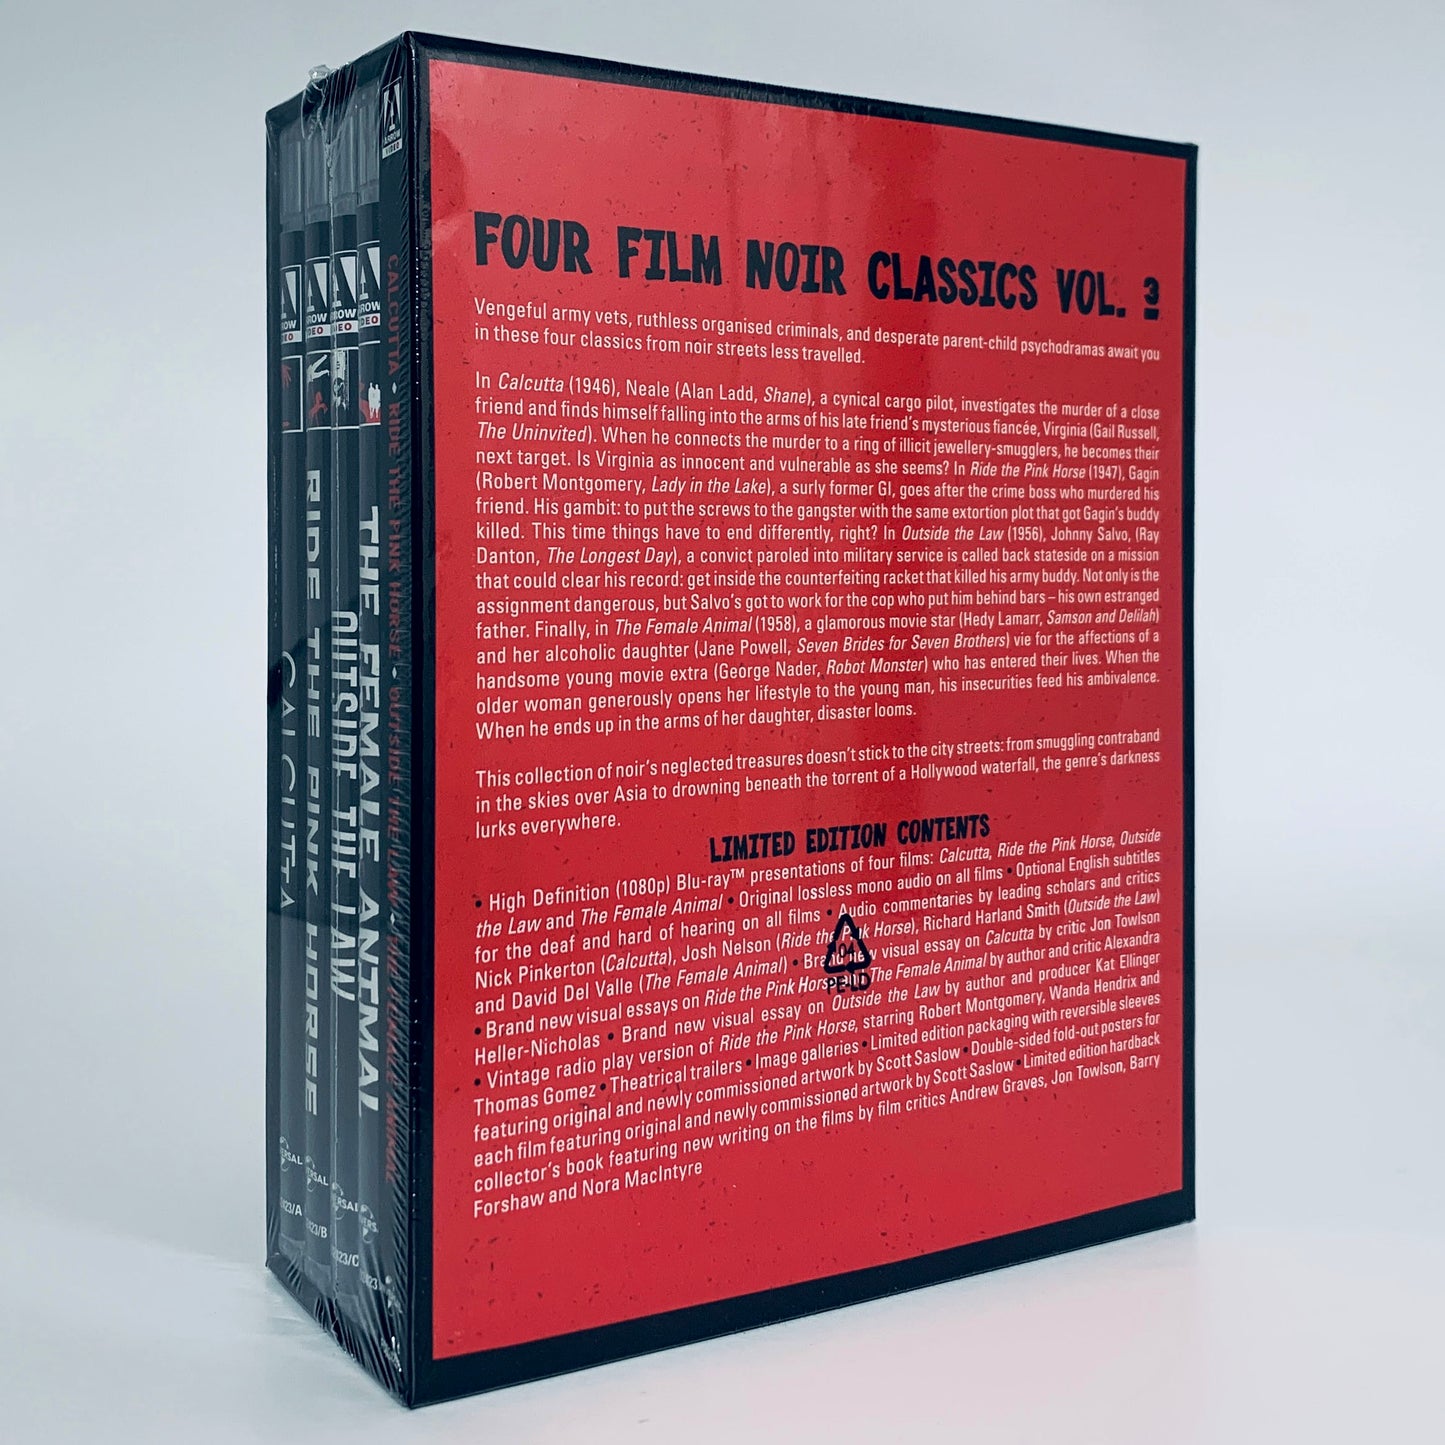 Four Film Noir Classics Vol 3 III Calcutta Ride the Pink Horse Outside the Law Female Animal Blu-ray Arrow